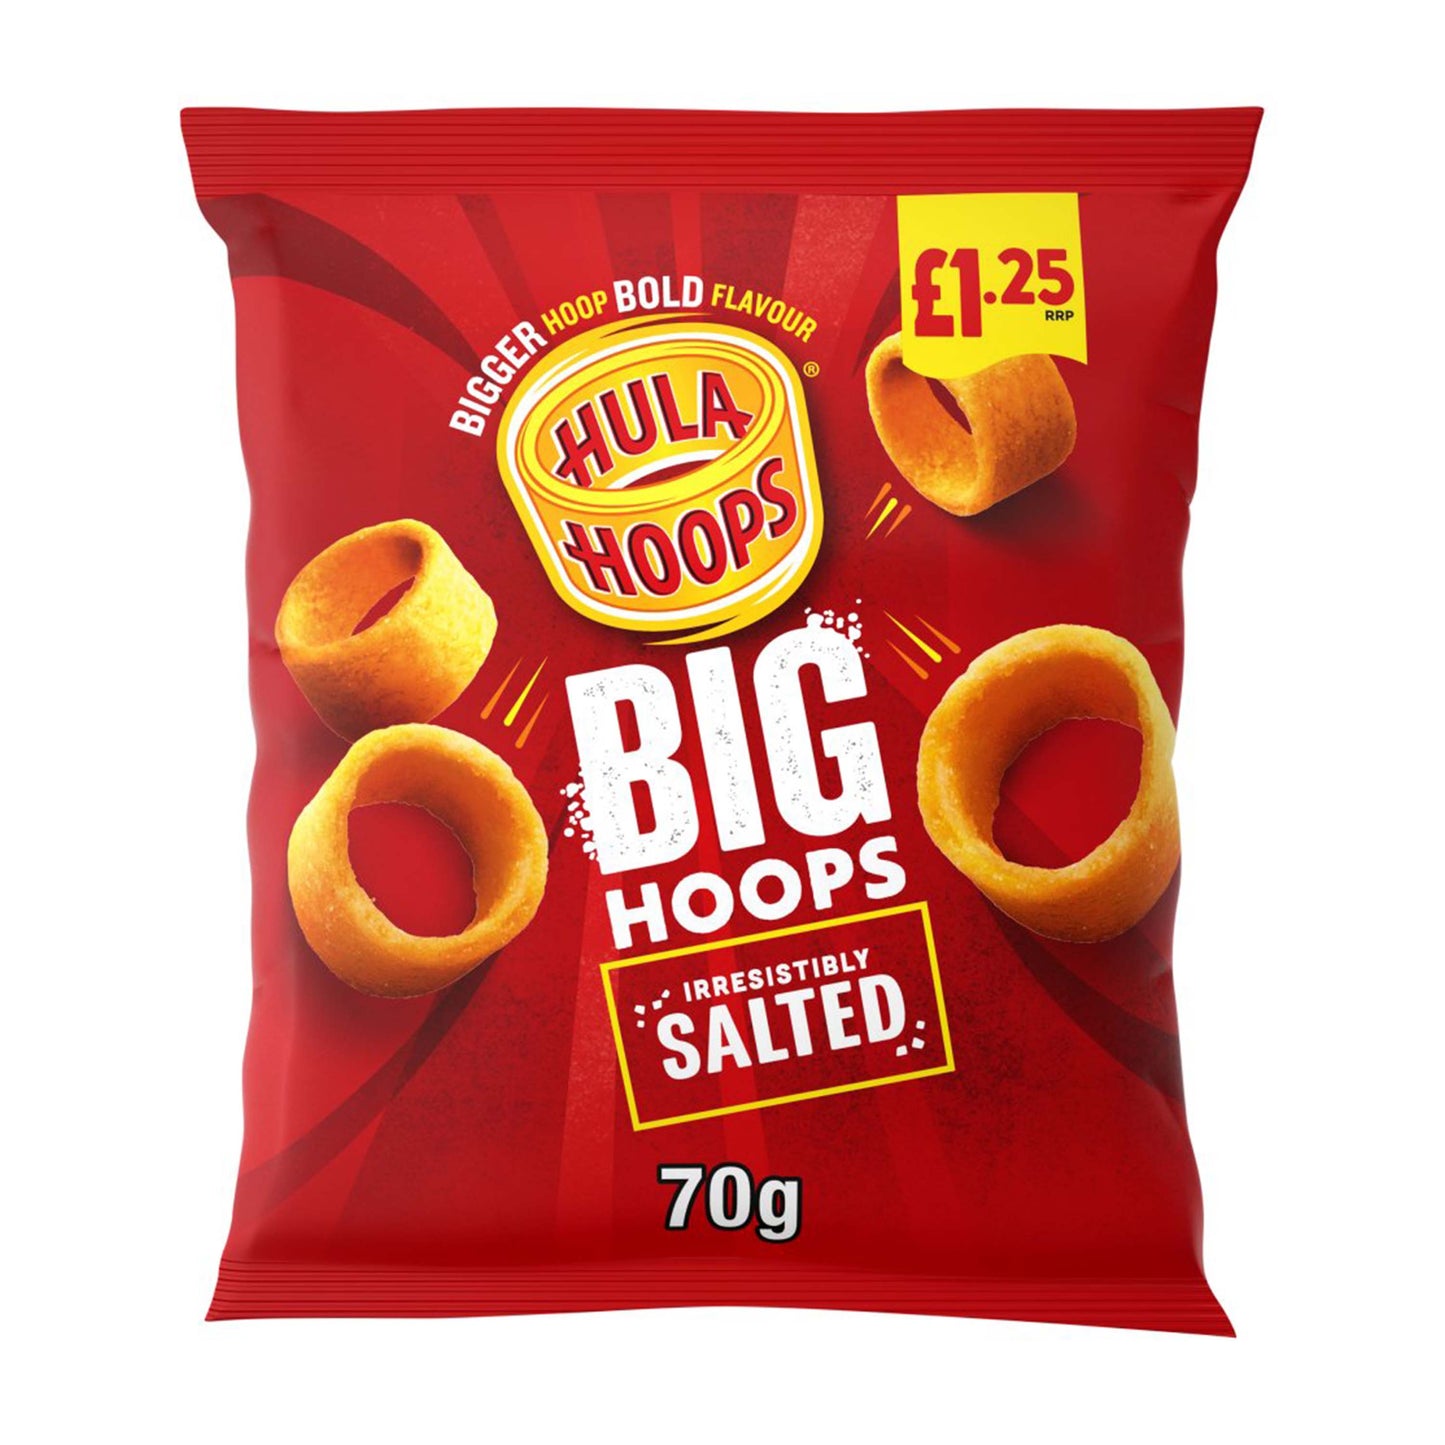 Hula Hoops Big Hoops Original 70g – (£1.25 Bag) - British Snacks